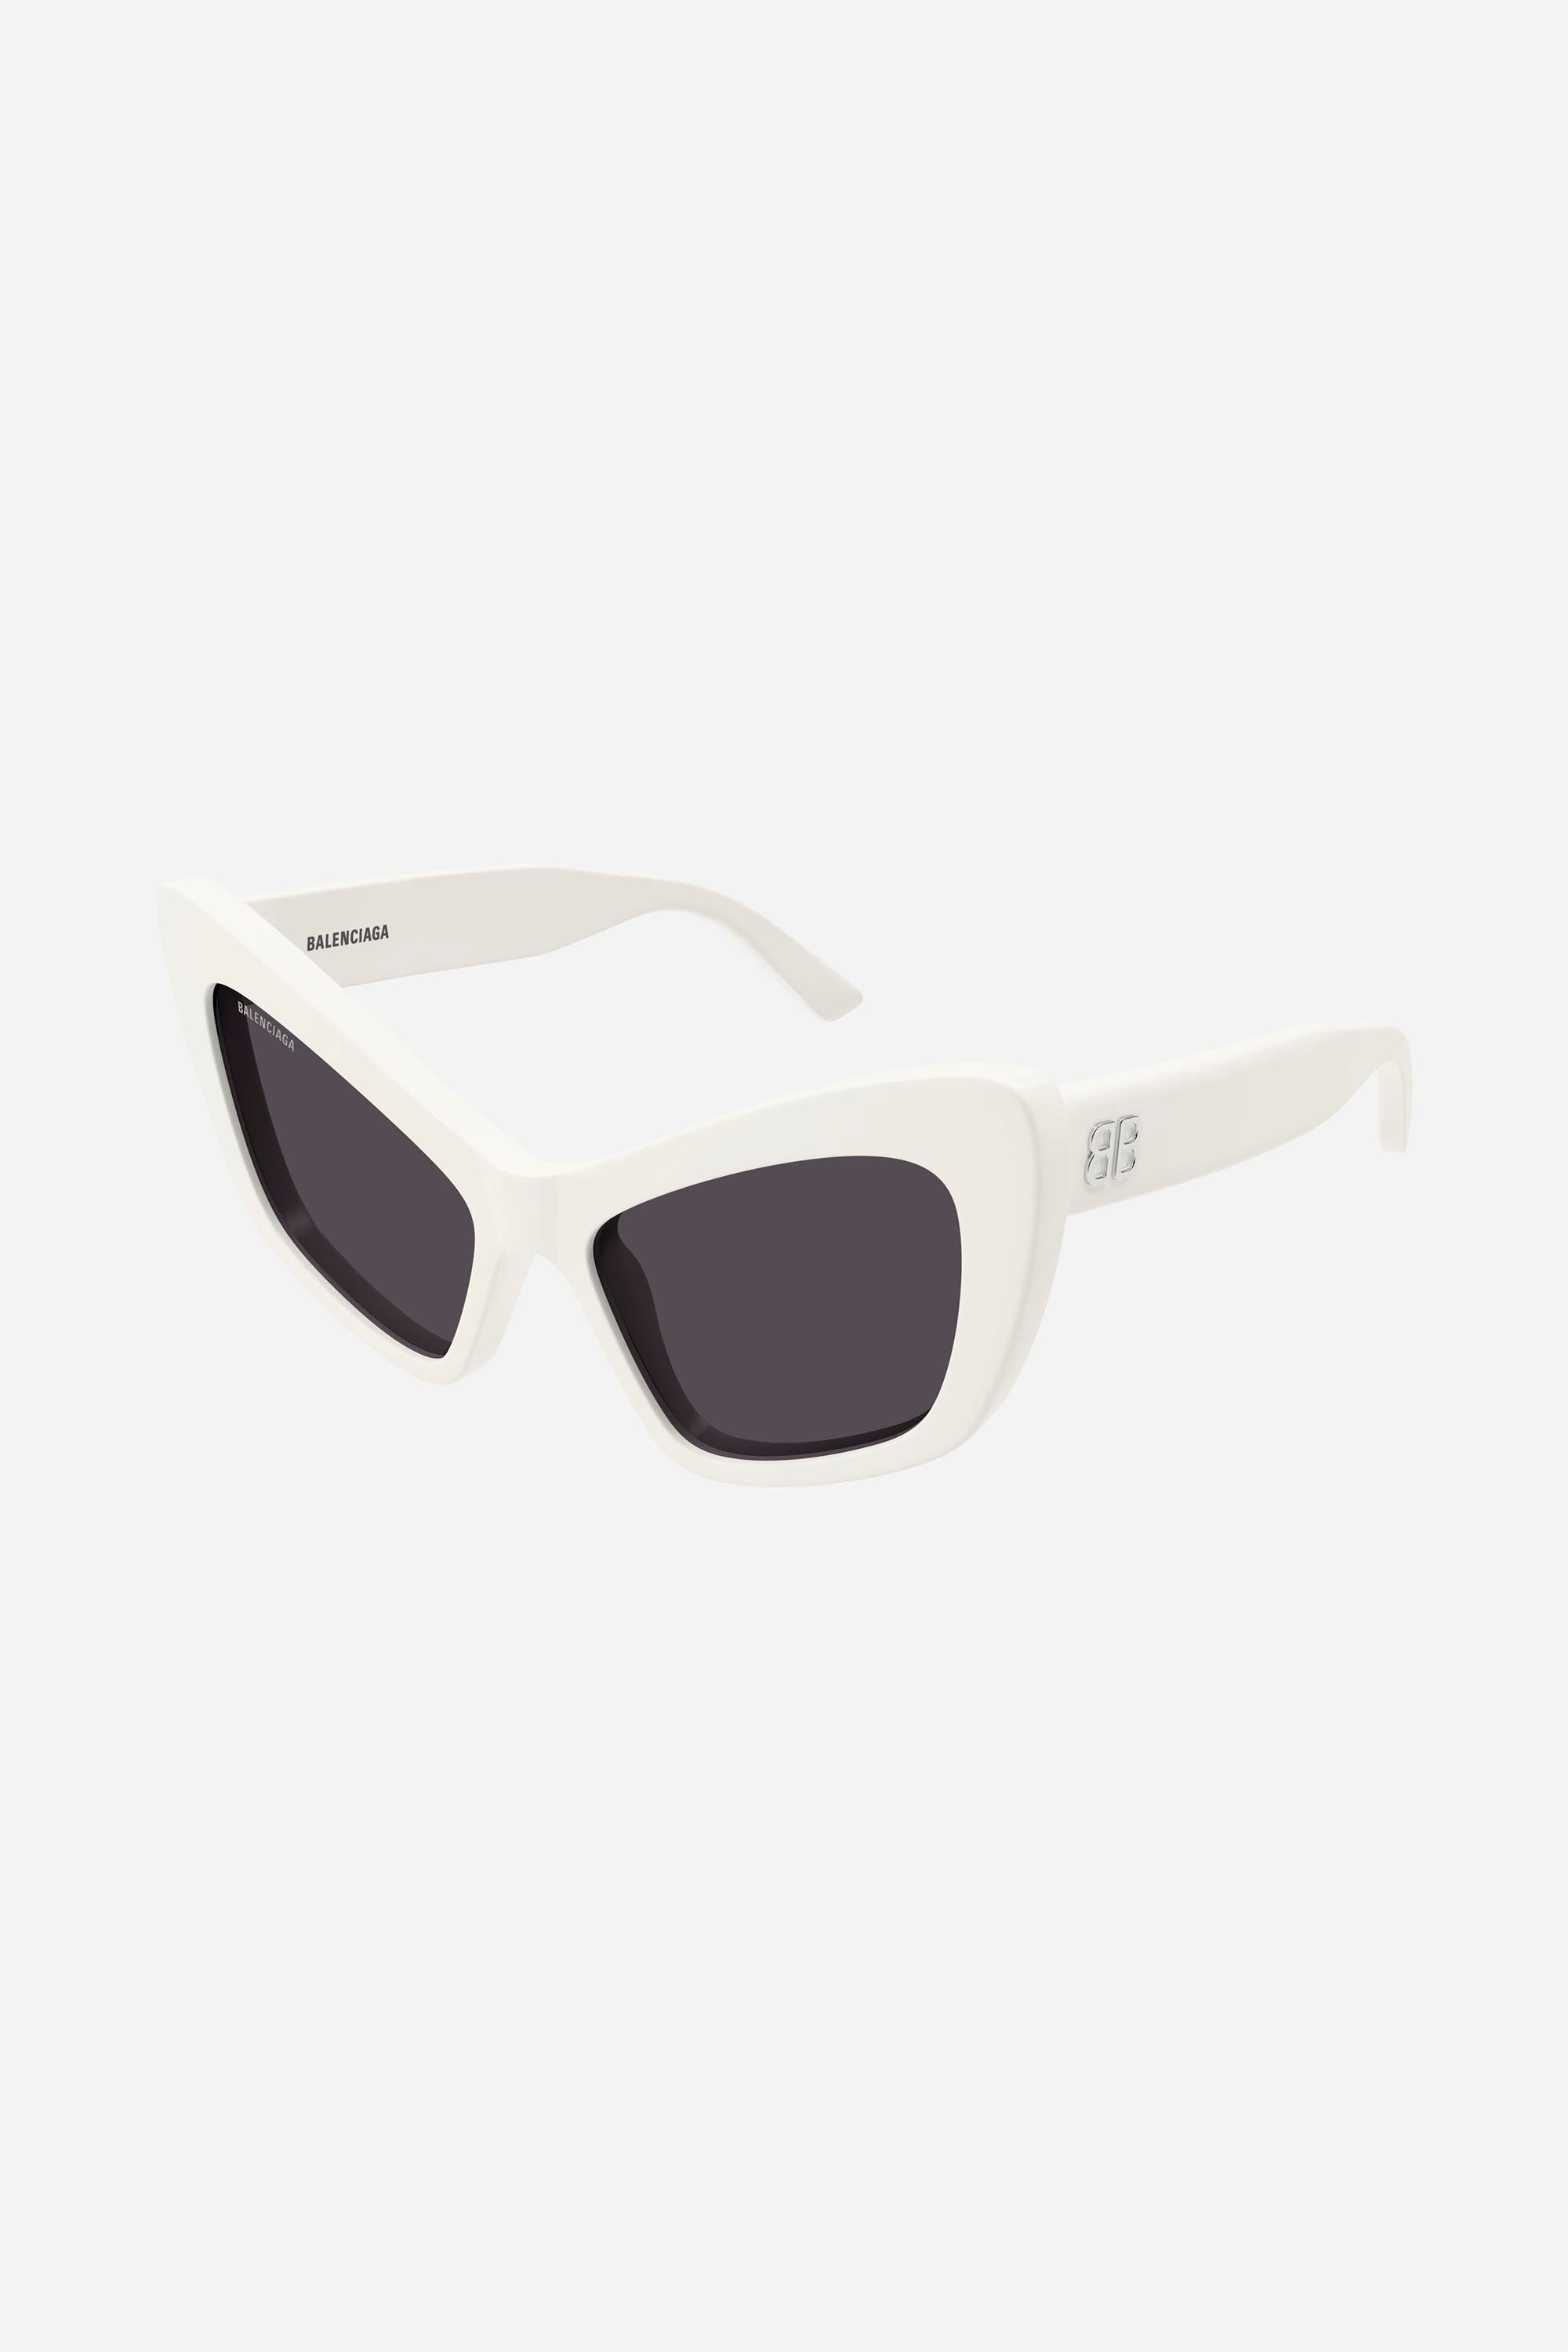 Balenciaga white butterfly shape sunglasses - Eyewear Club